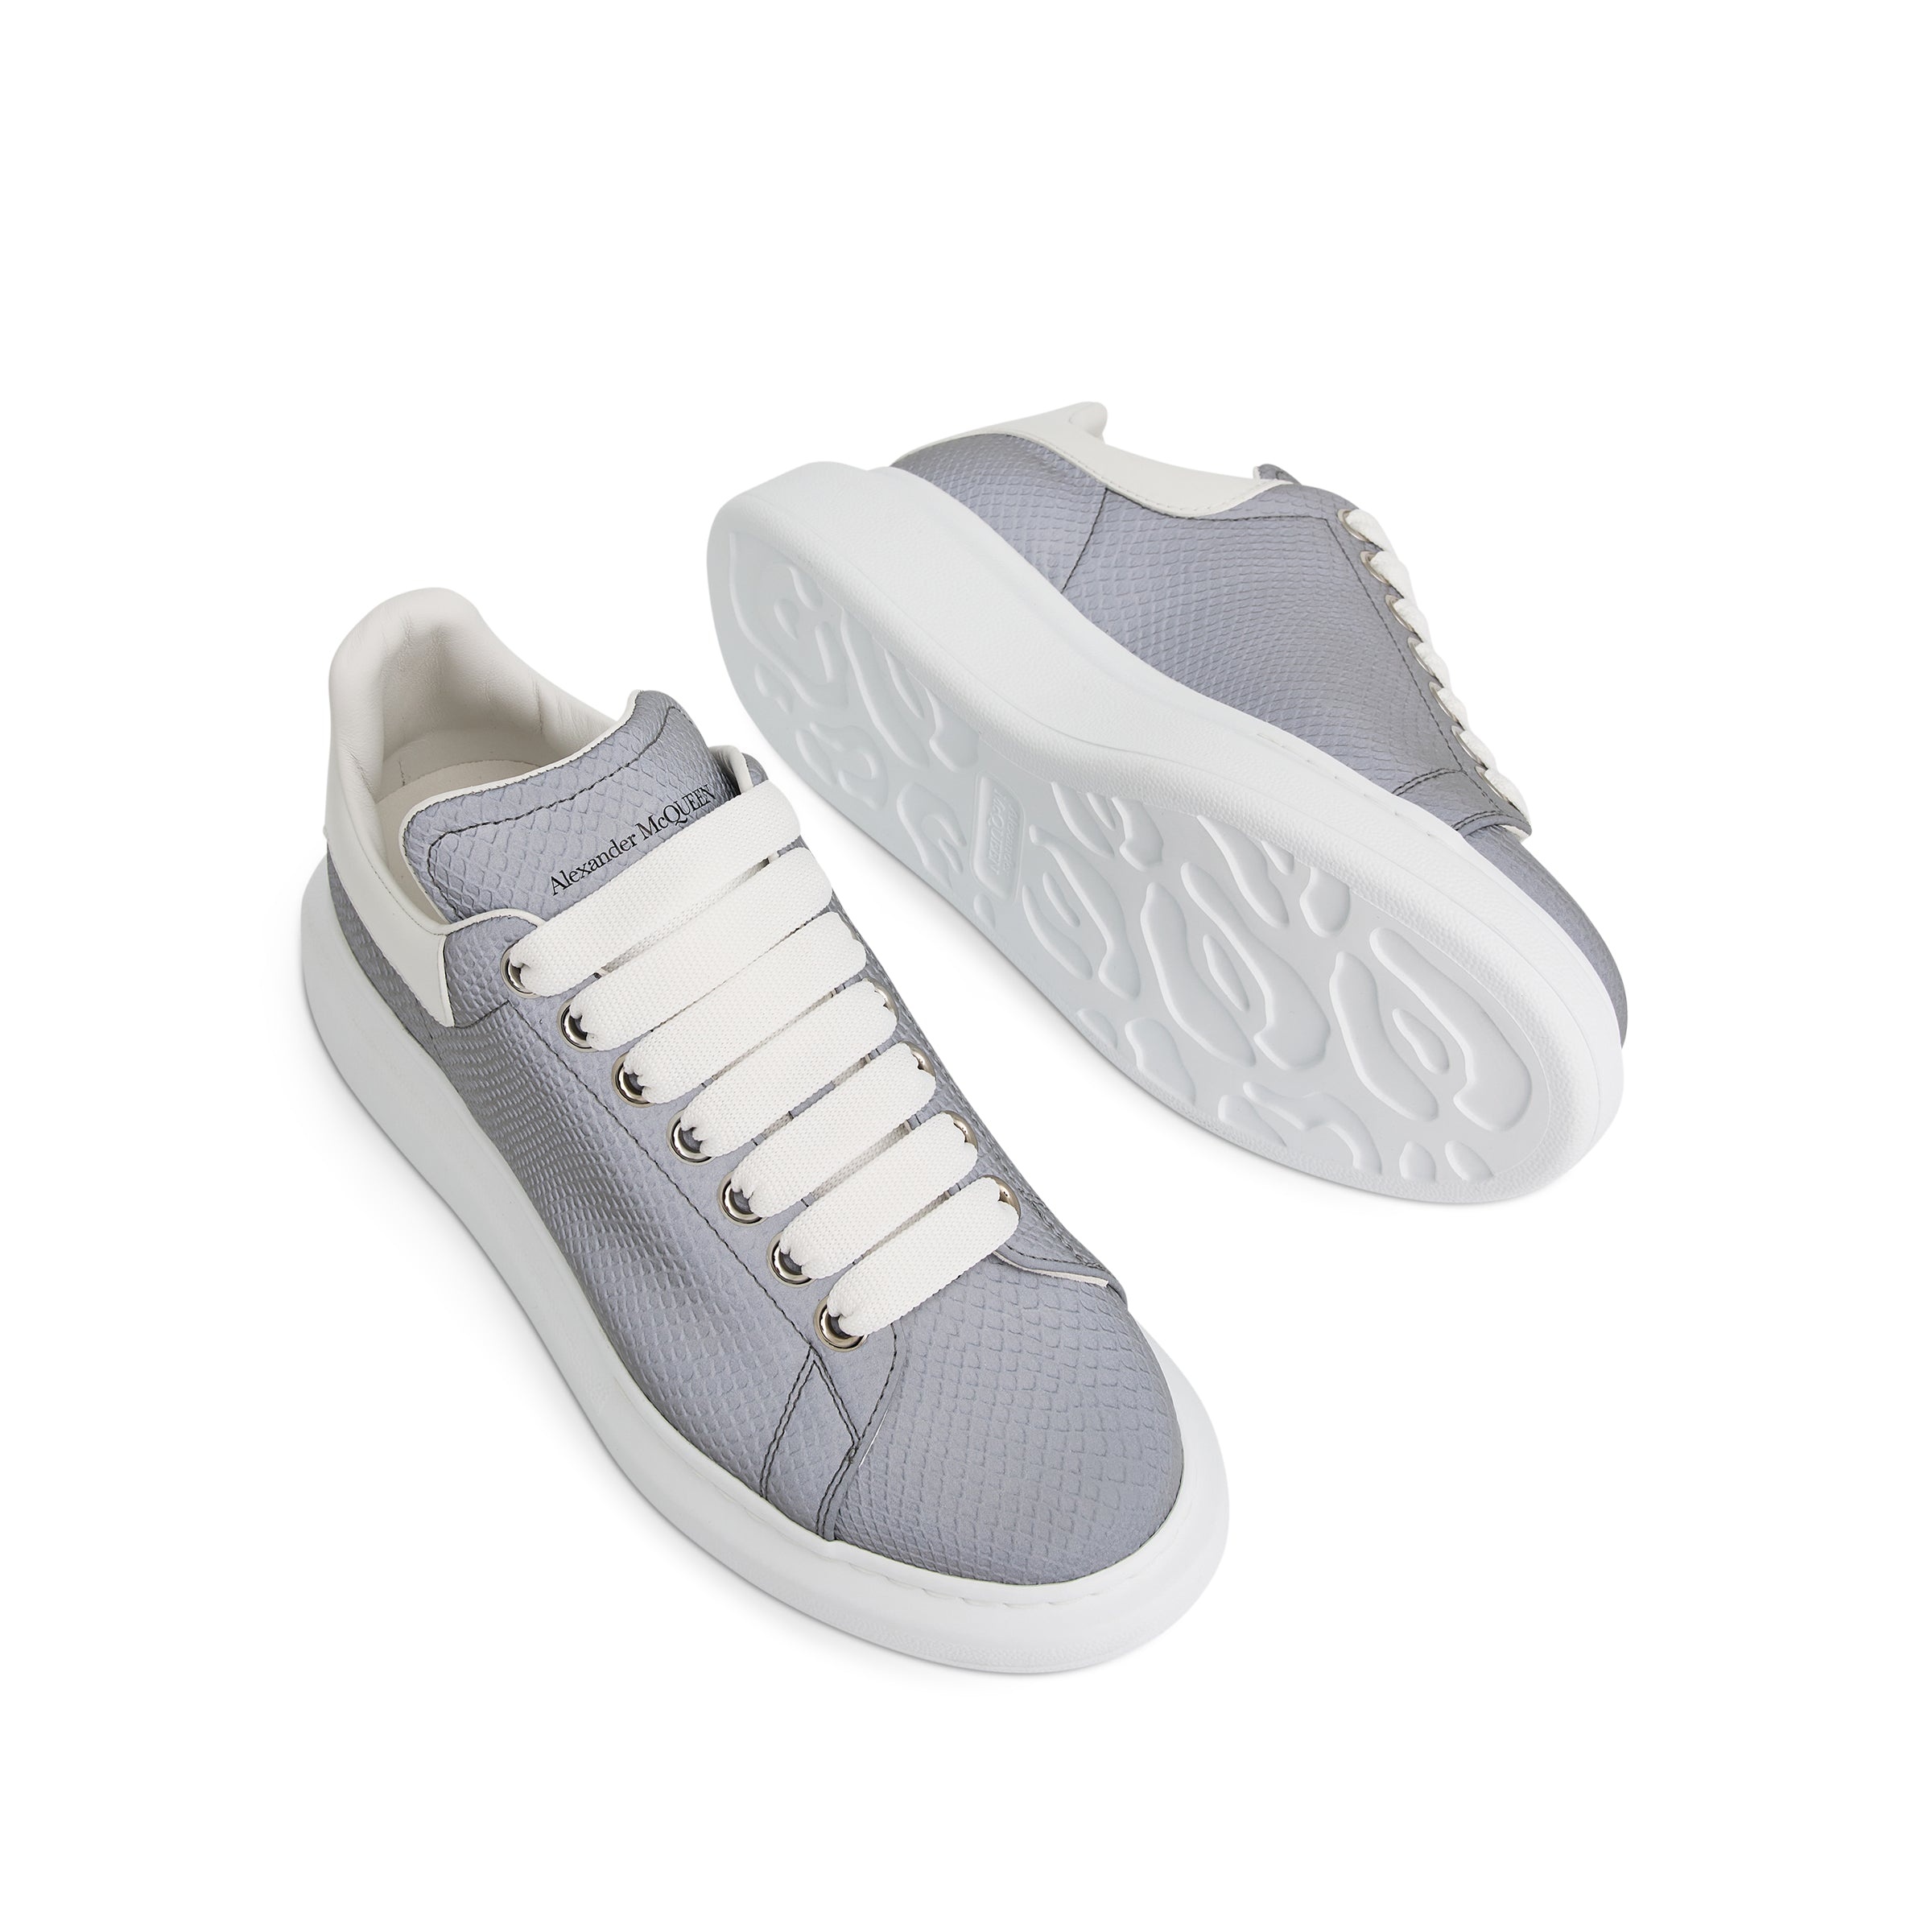 Larry Reflective Sneaker in Grey/White - 4